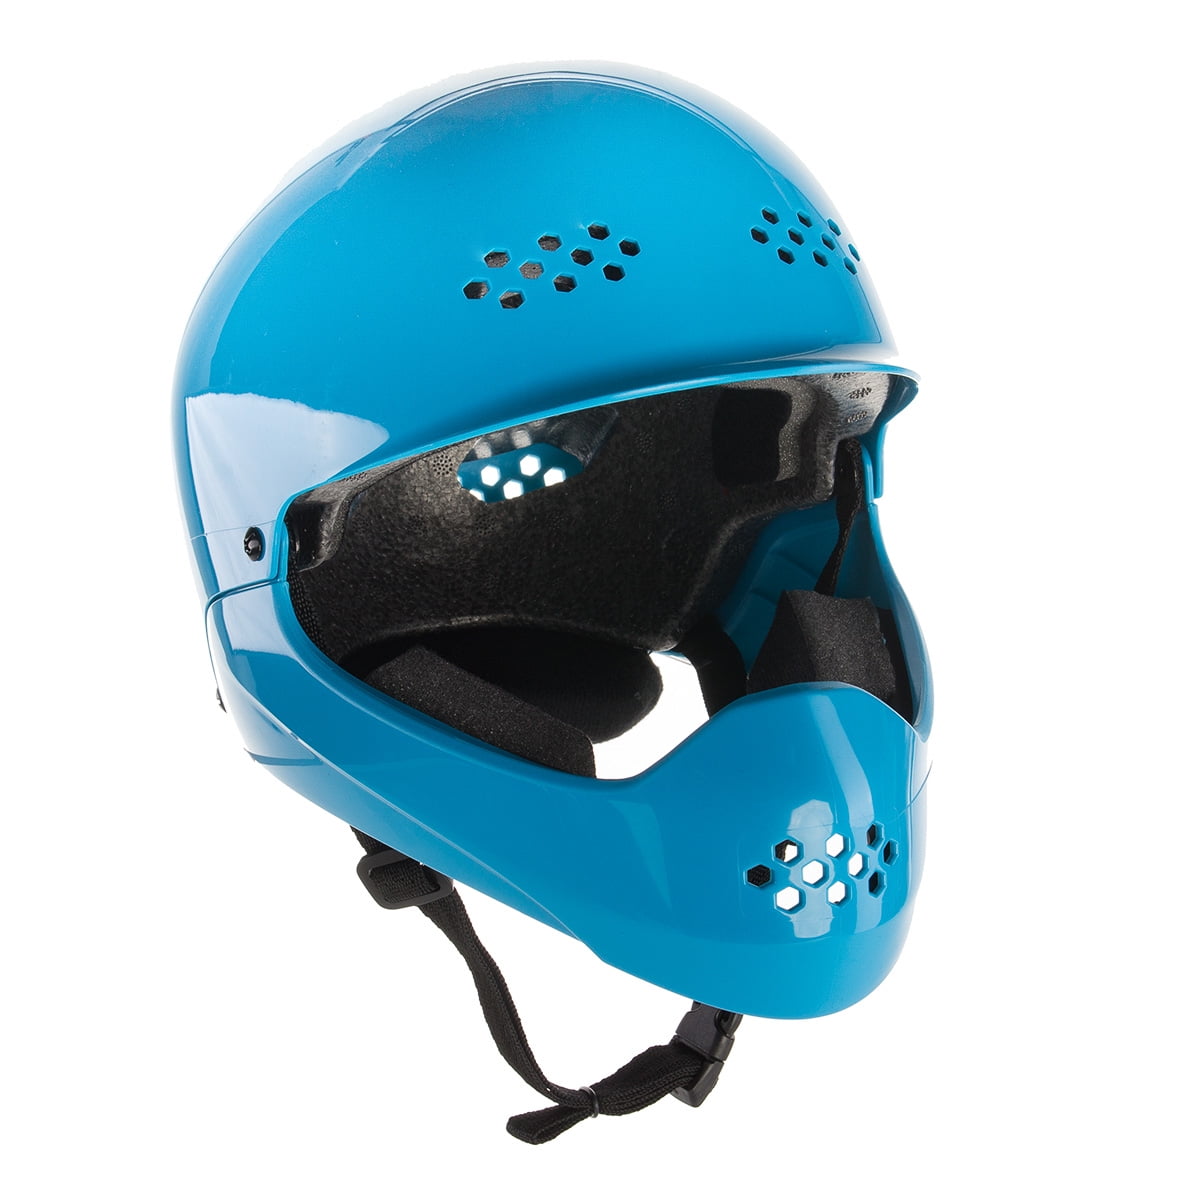 Raleigh Kids Helmet  Lil Terra Skedaddle  48-54cm Red White Blue Bike Safety 